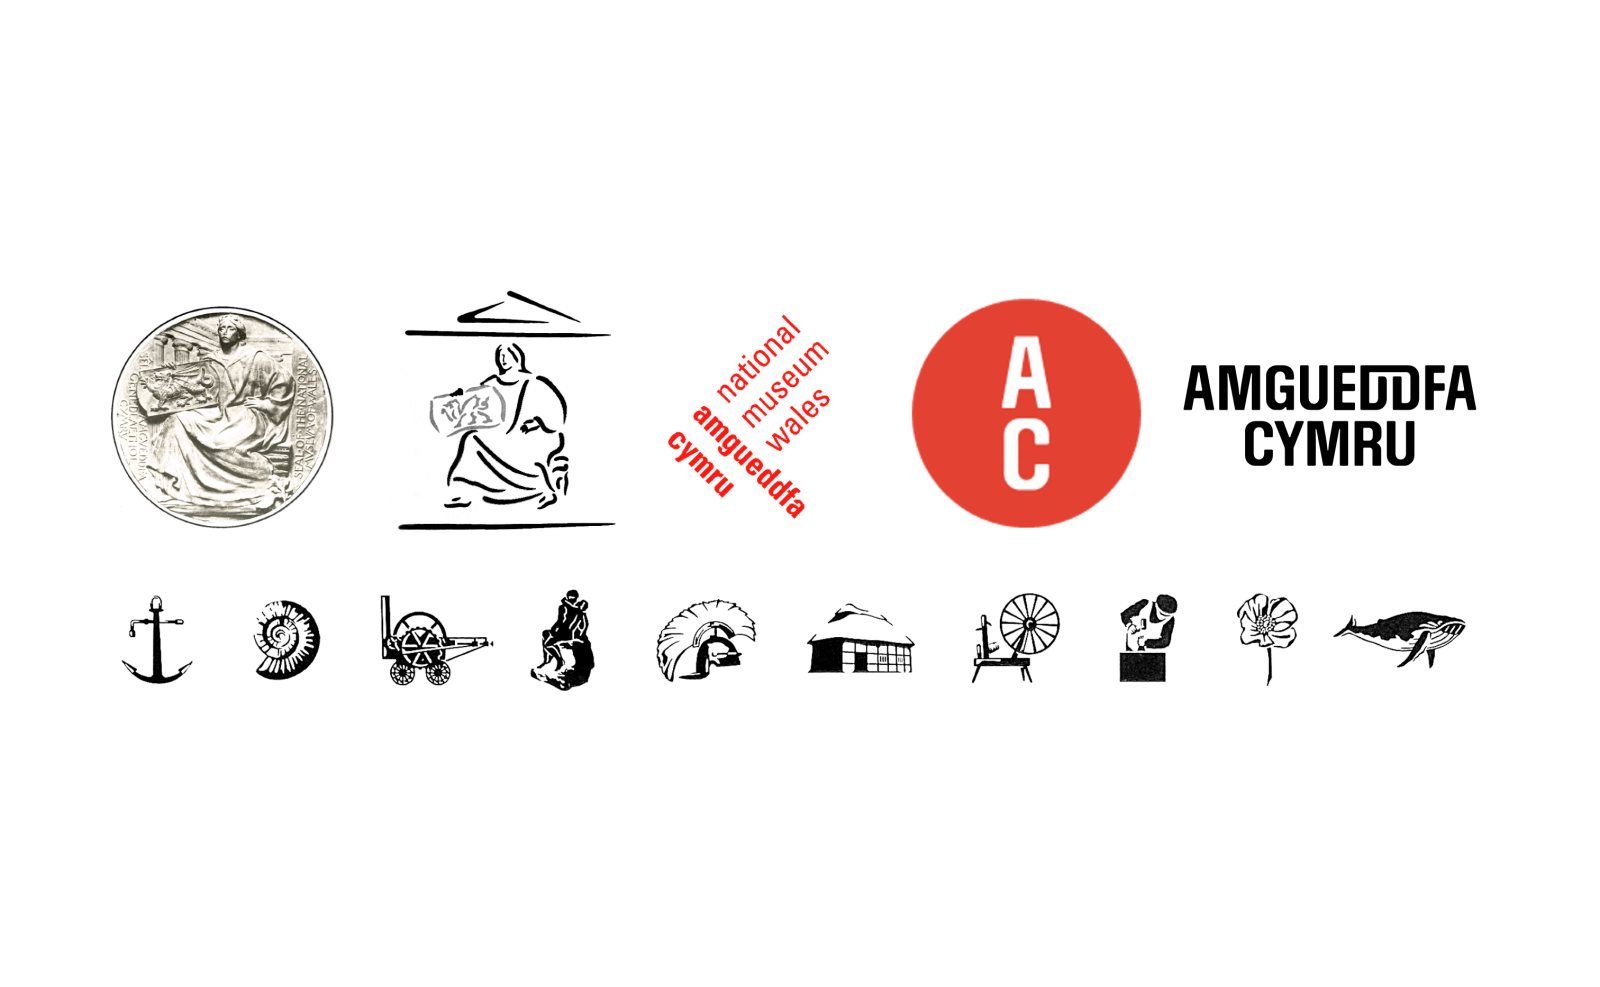 A compilation of different Amgueddfa Cymru Logos